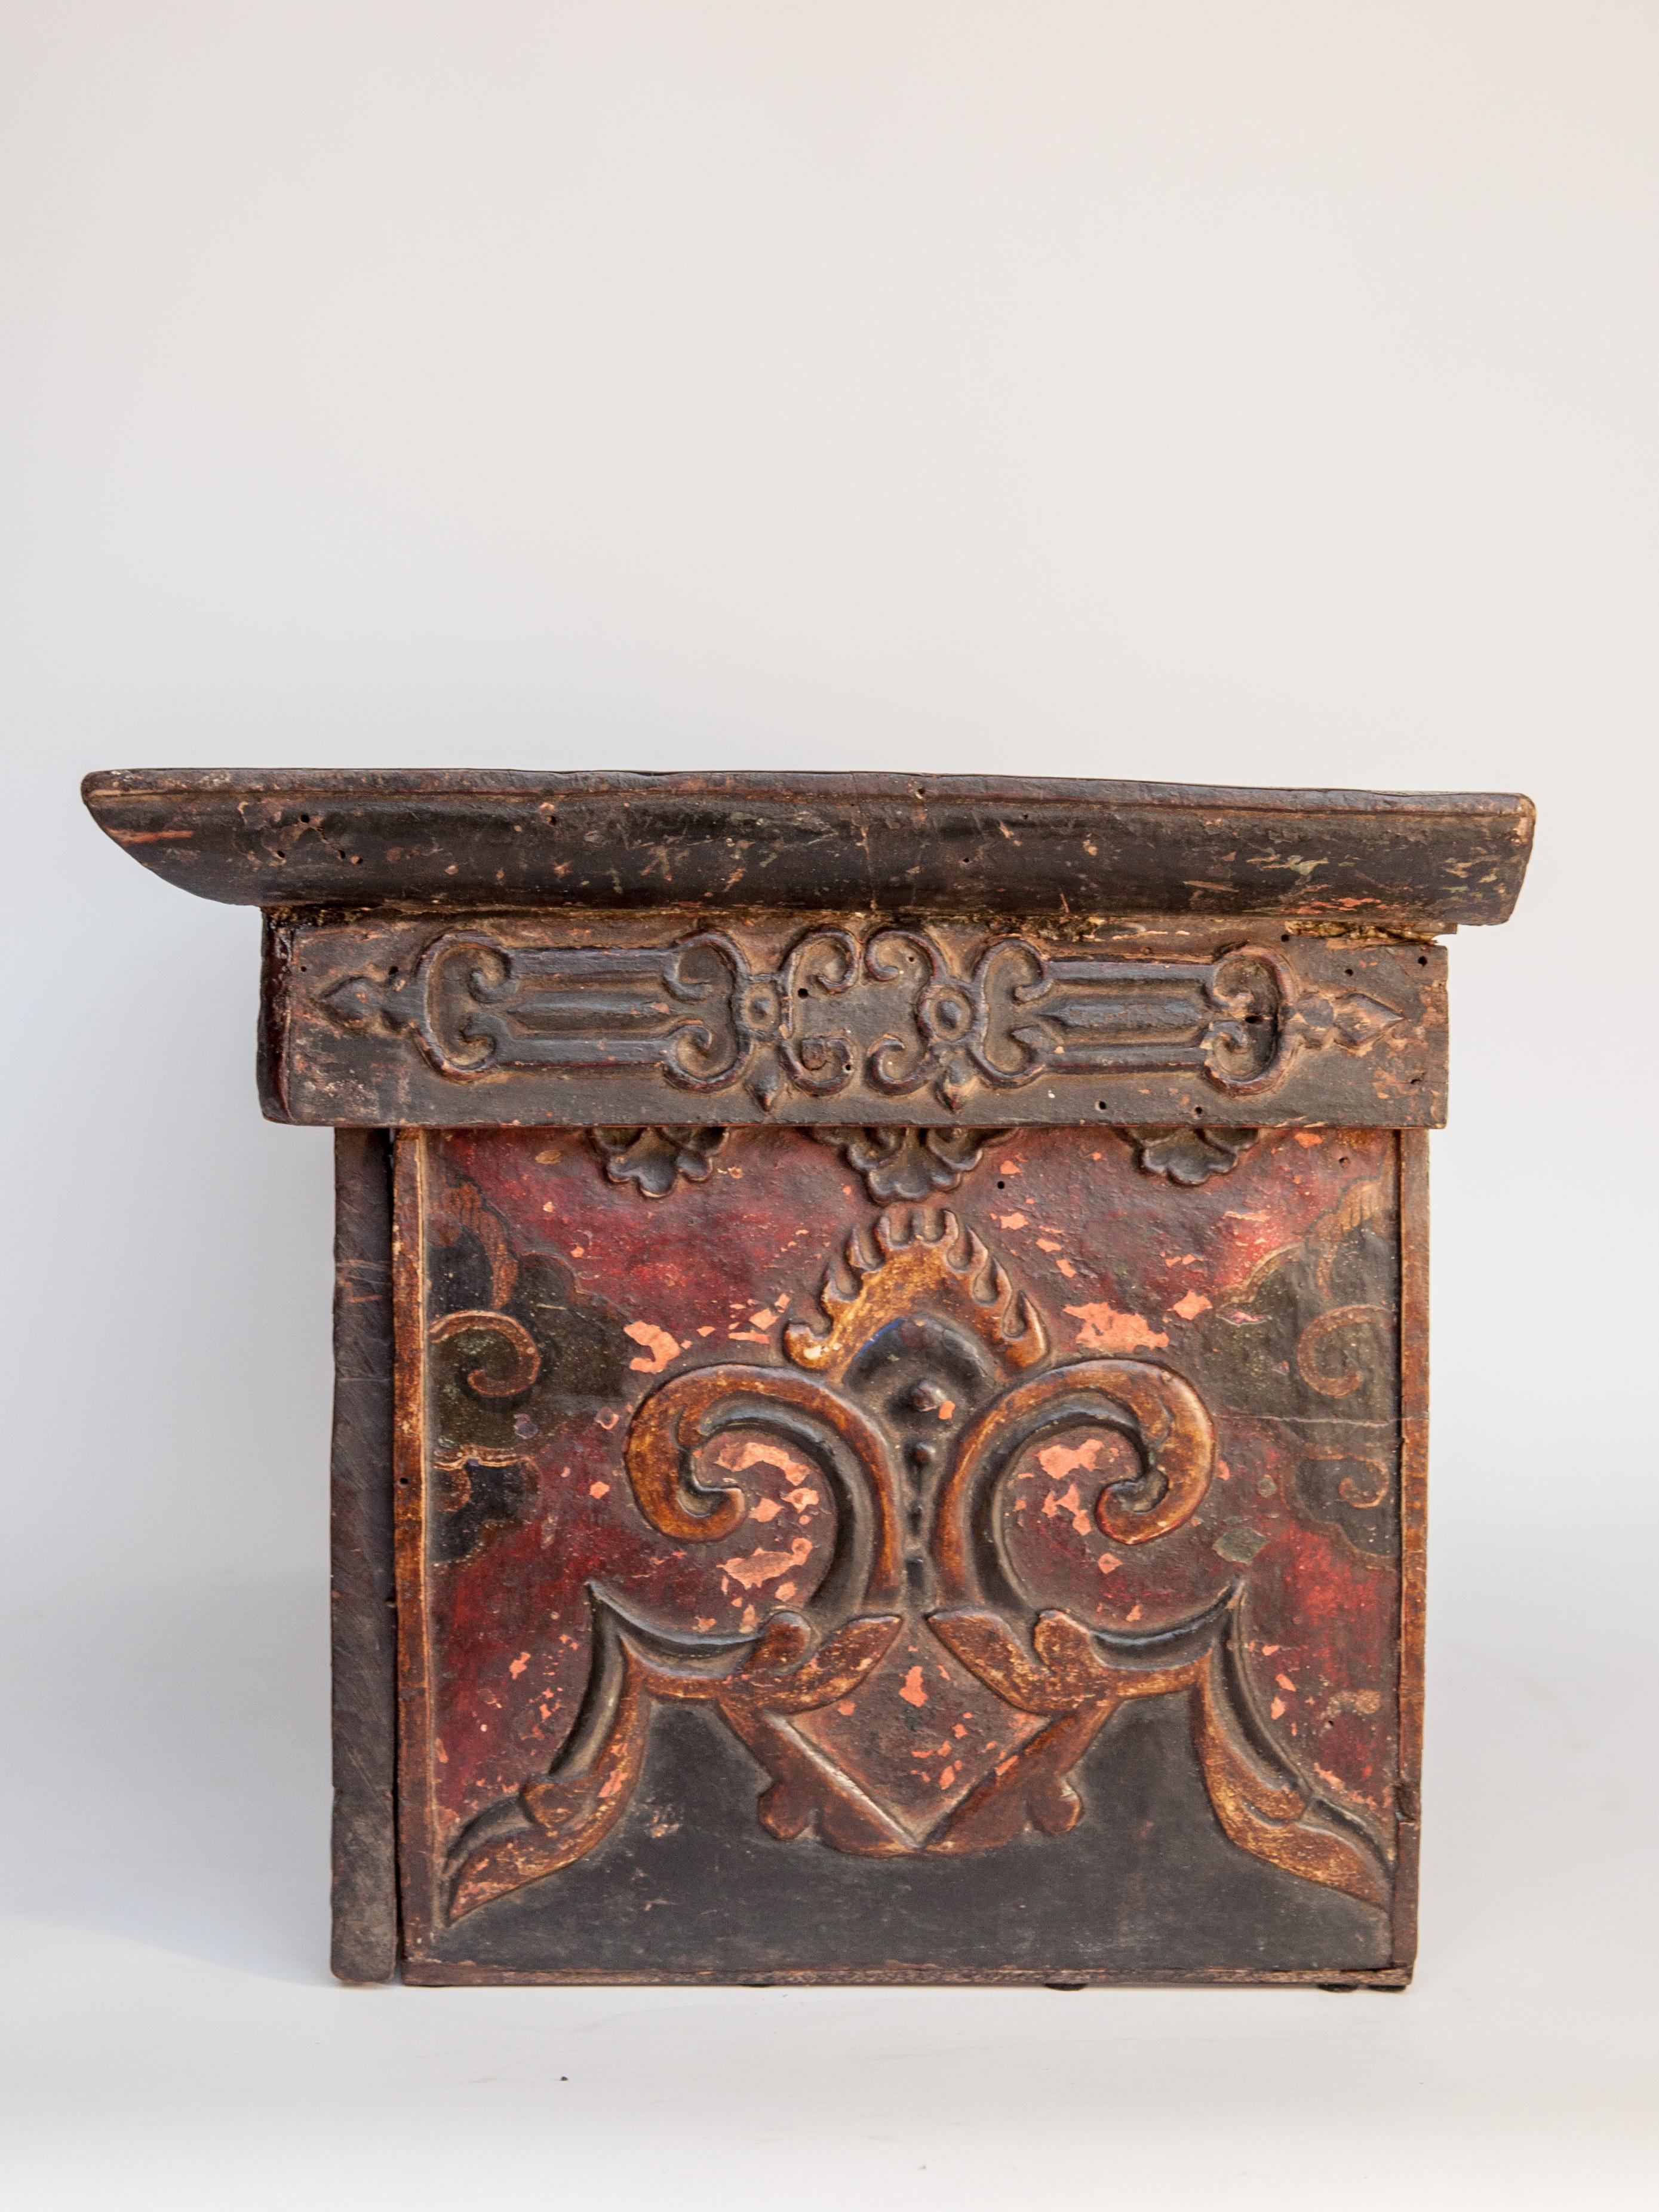 Tibetan Antique Choktse, Tea or Writing Table from Tibet, 19th Century or Earlier